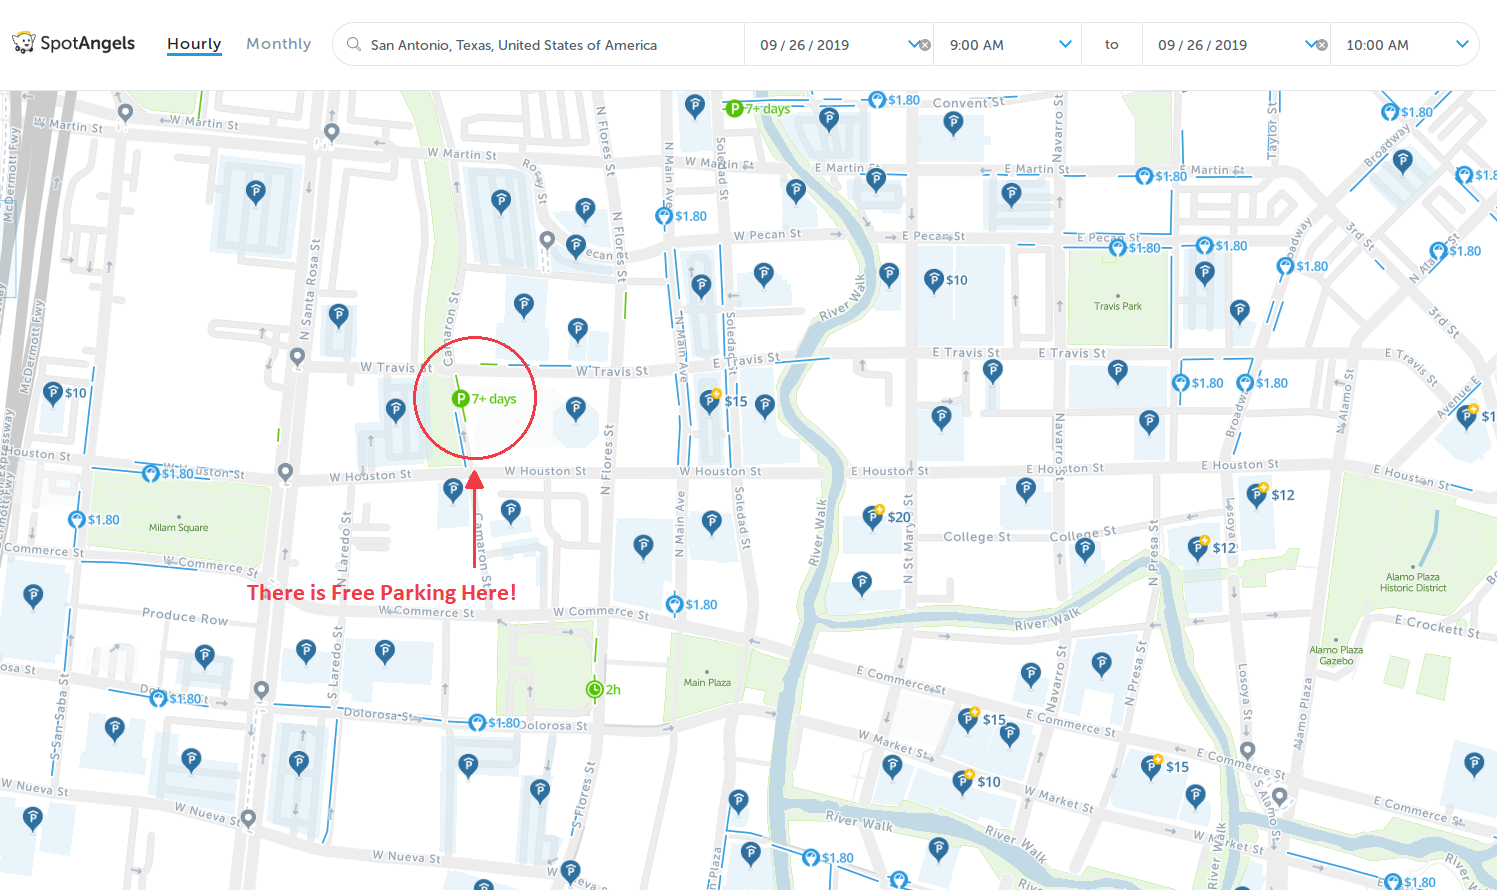 map of free parking in San Antonio - SpotAngels